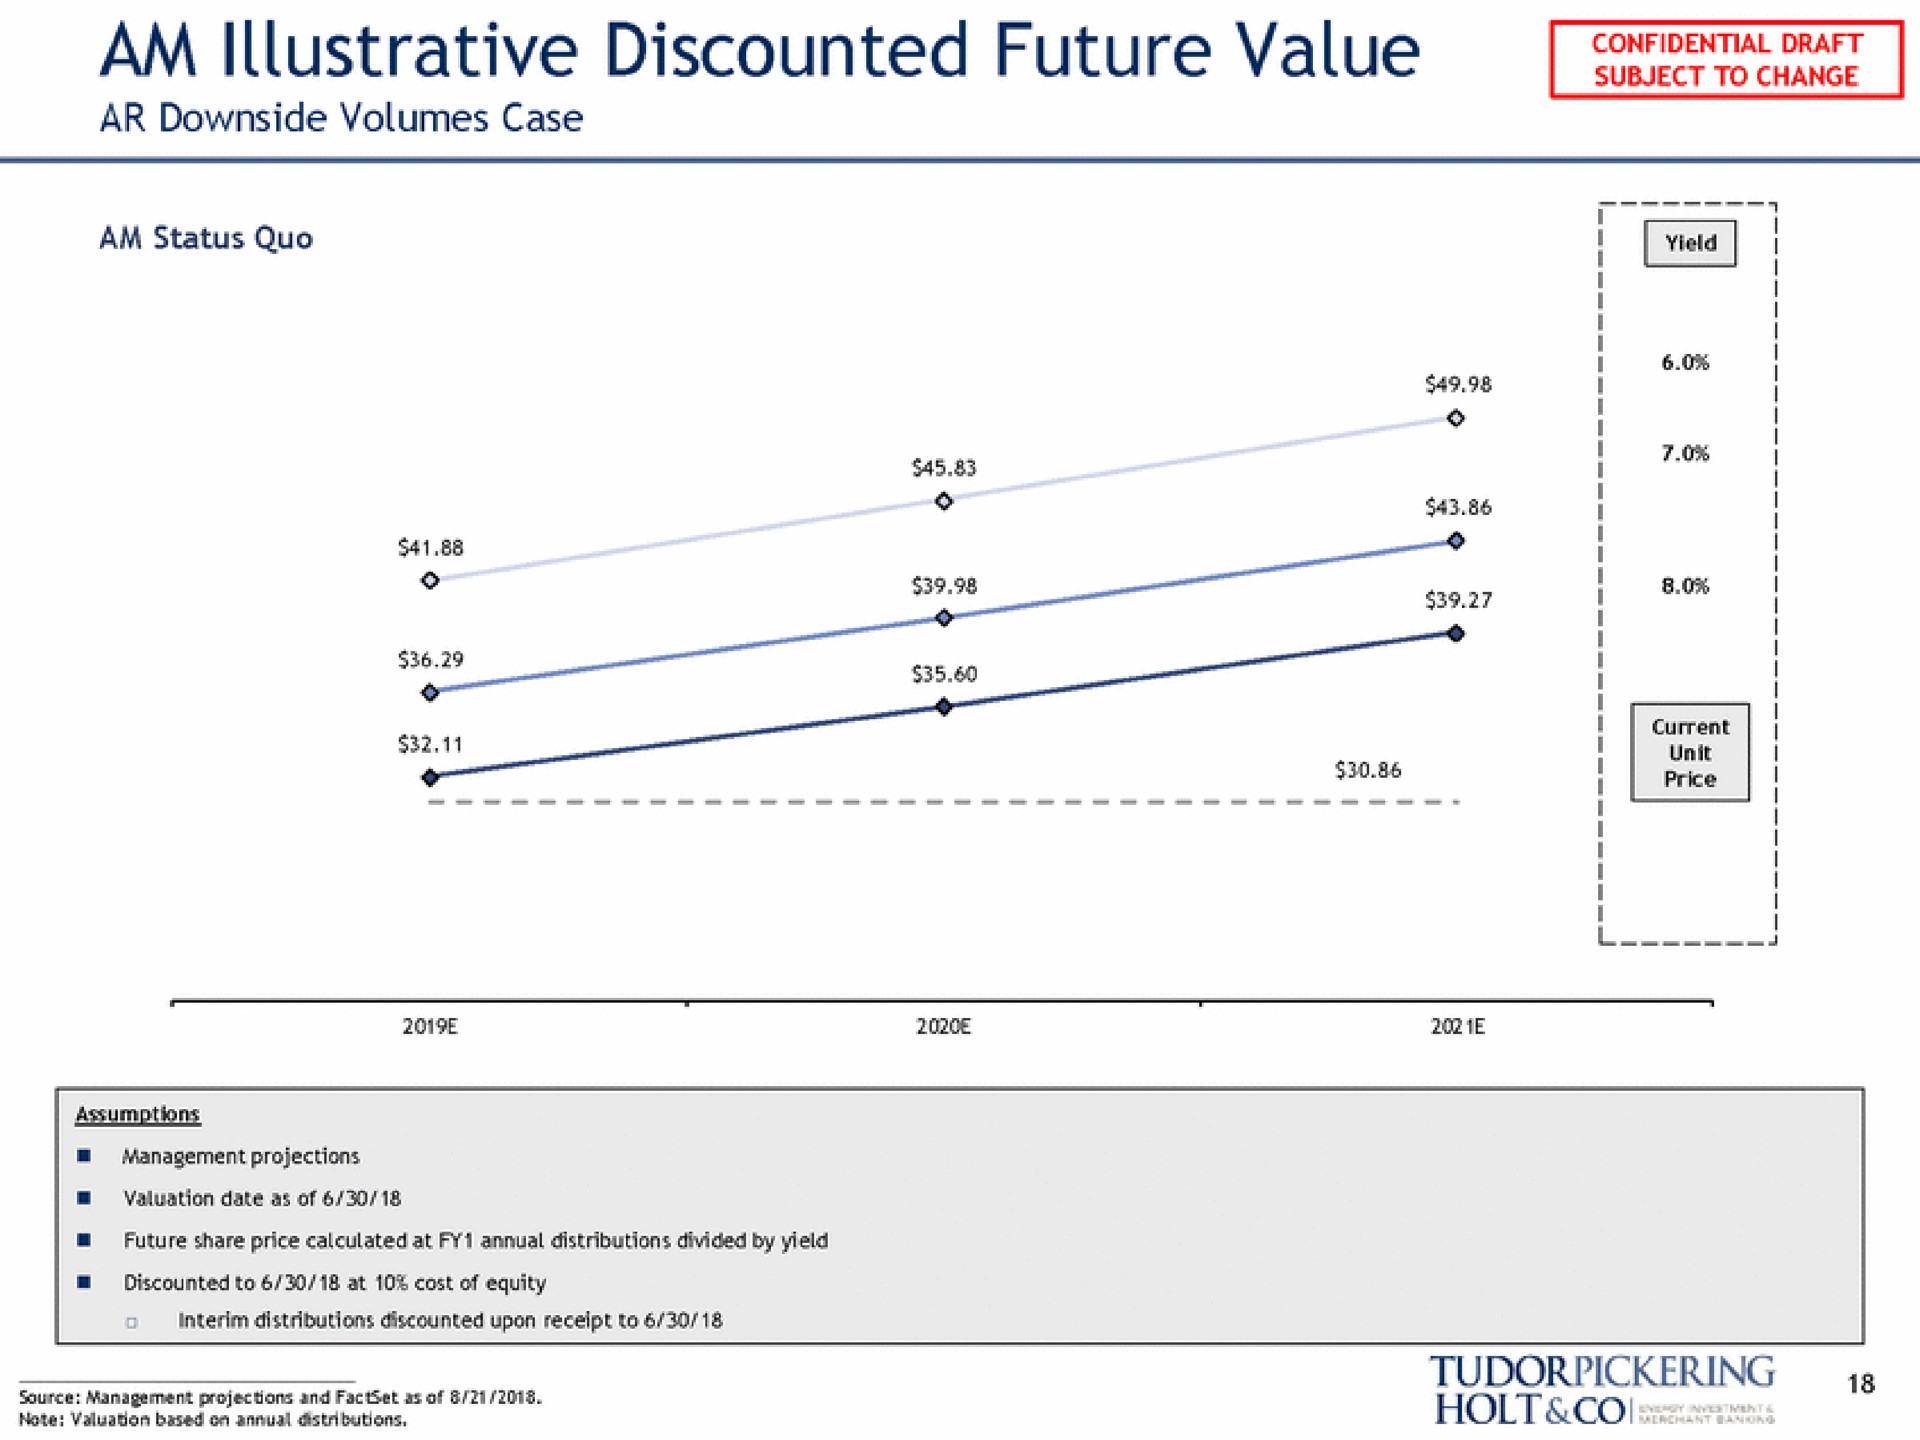 am illustrative discounted future value ring | Tudor, Pickering, Holt & Co